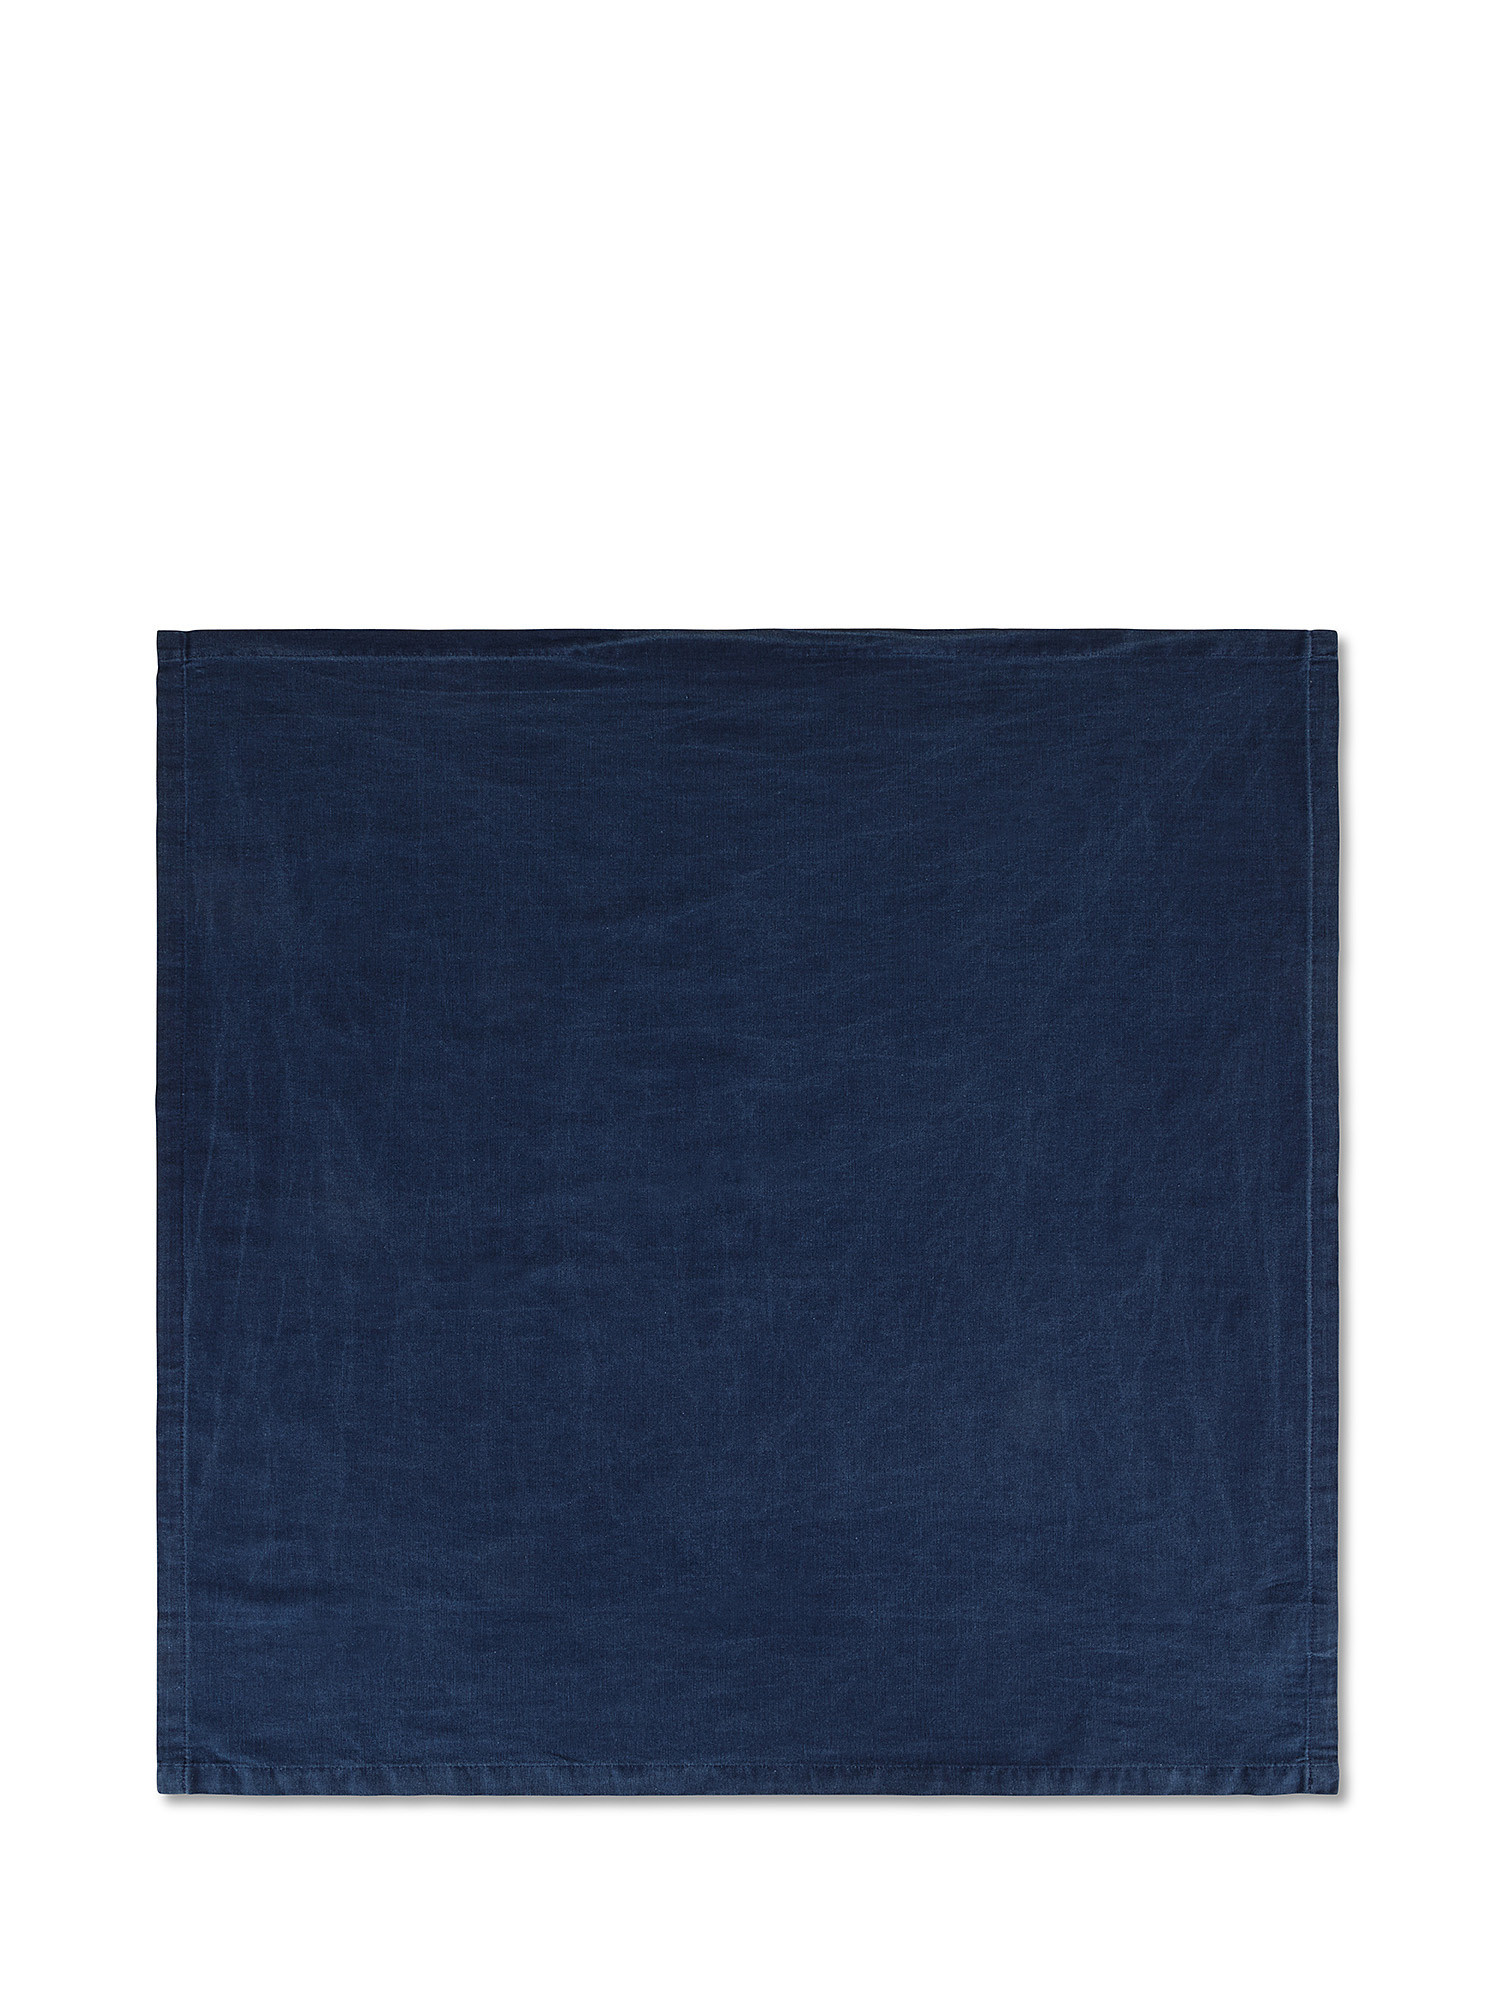 Tovaglia centrotavola cotone lavato tinta unita, Blu, large image number 0